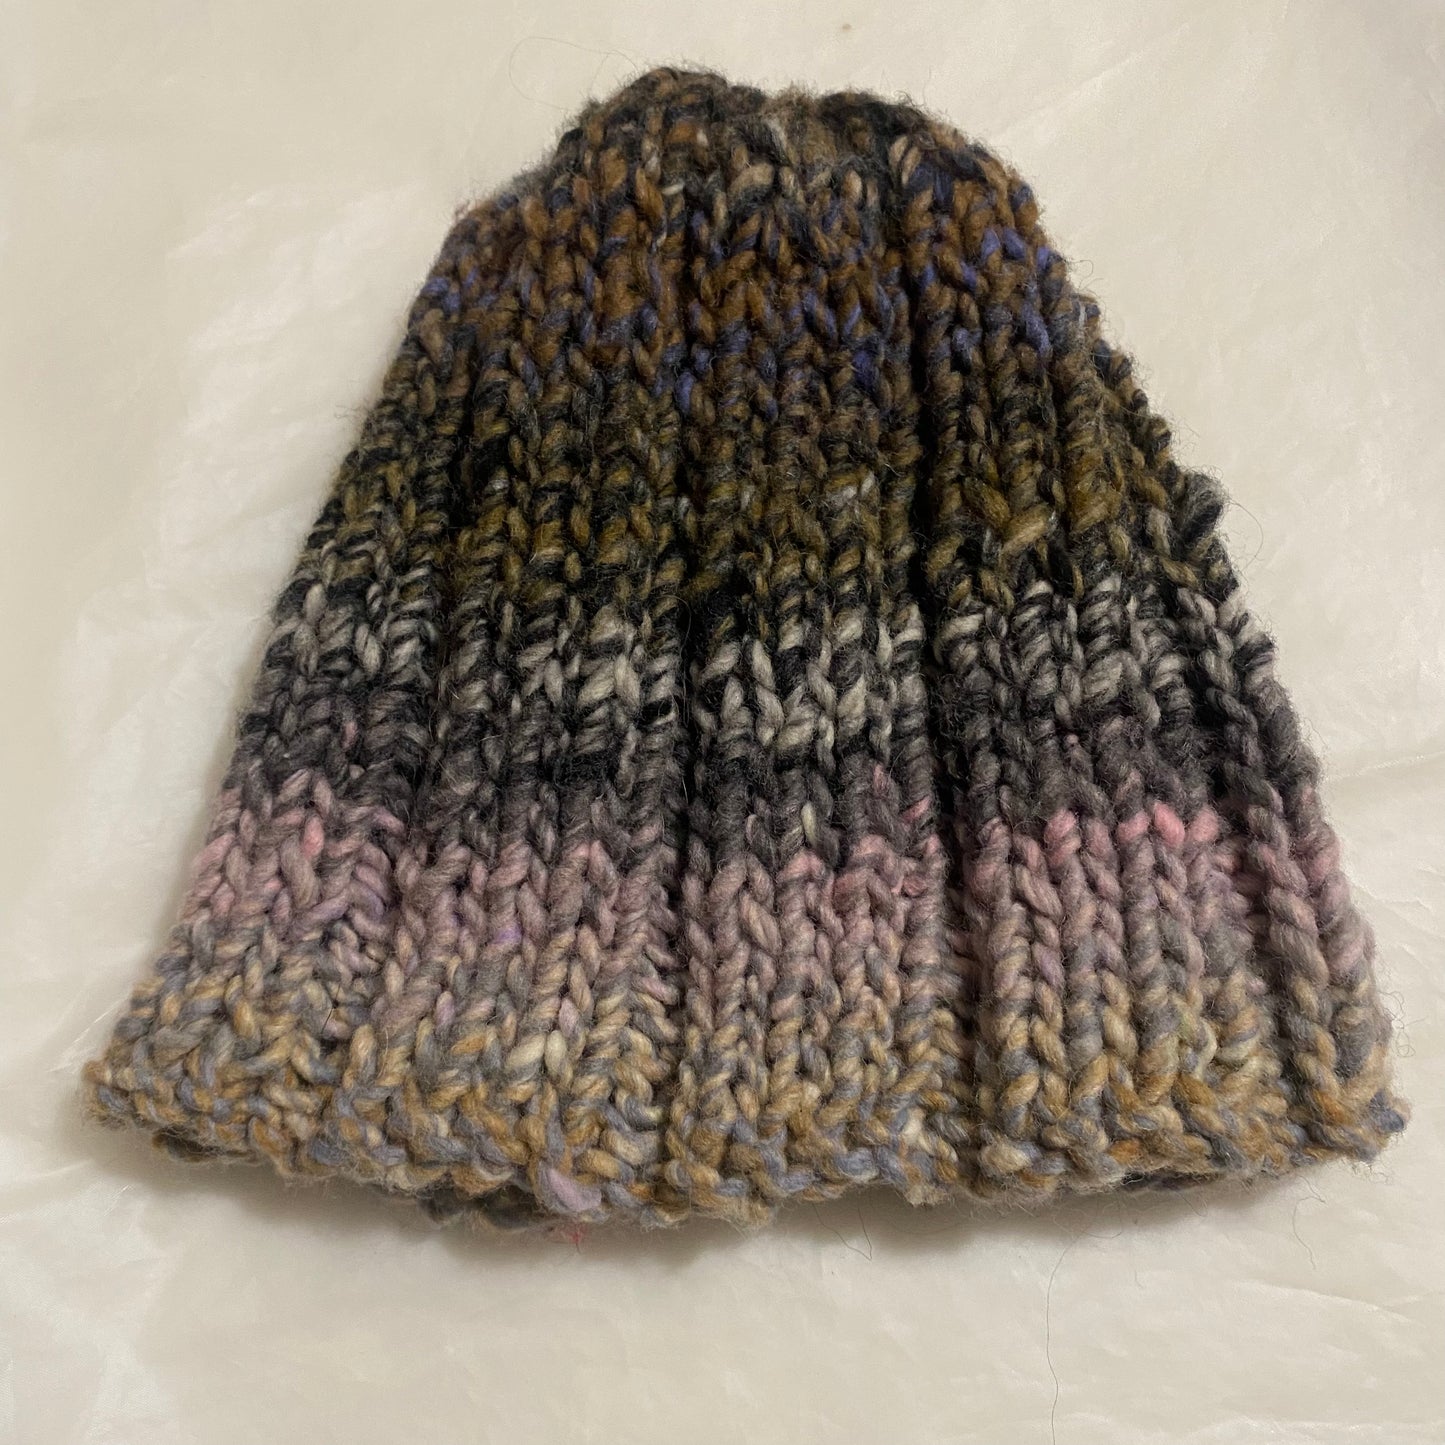 Knit Hats by Jane Dupree